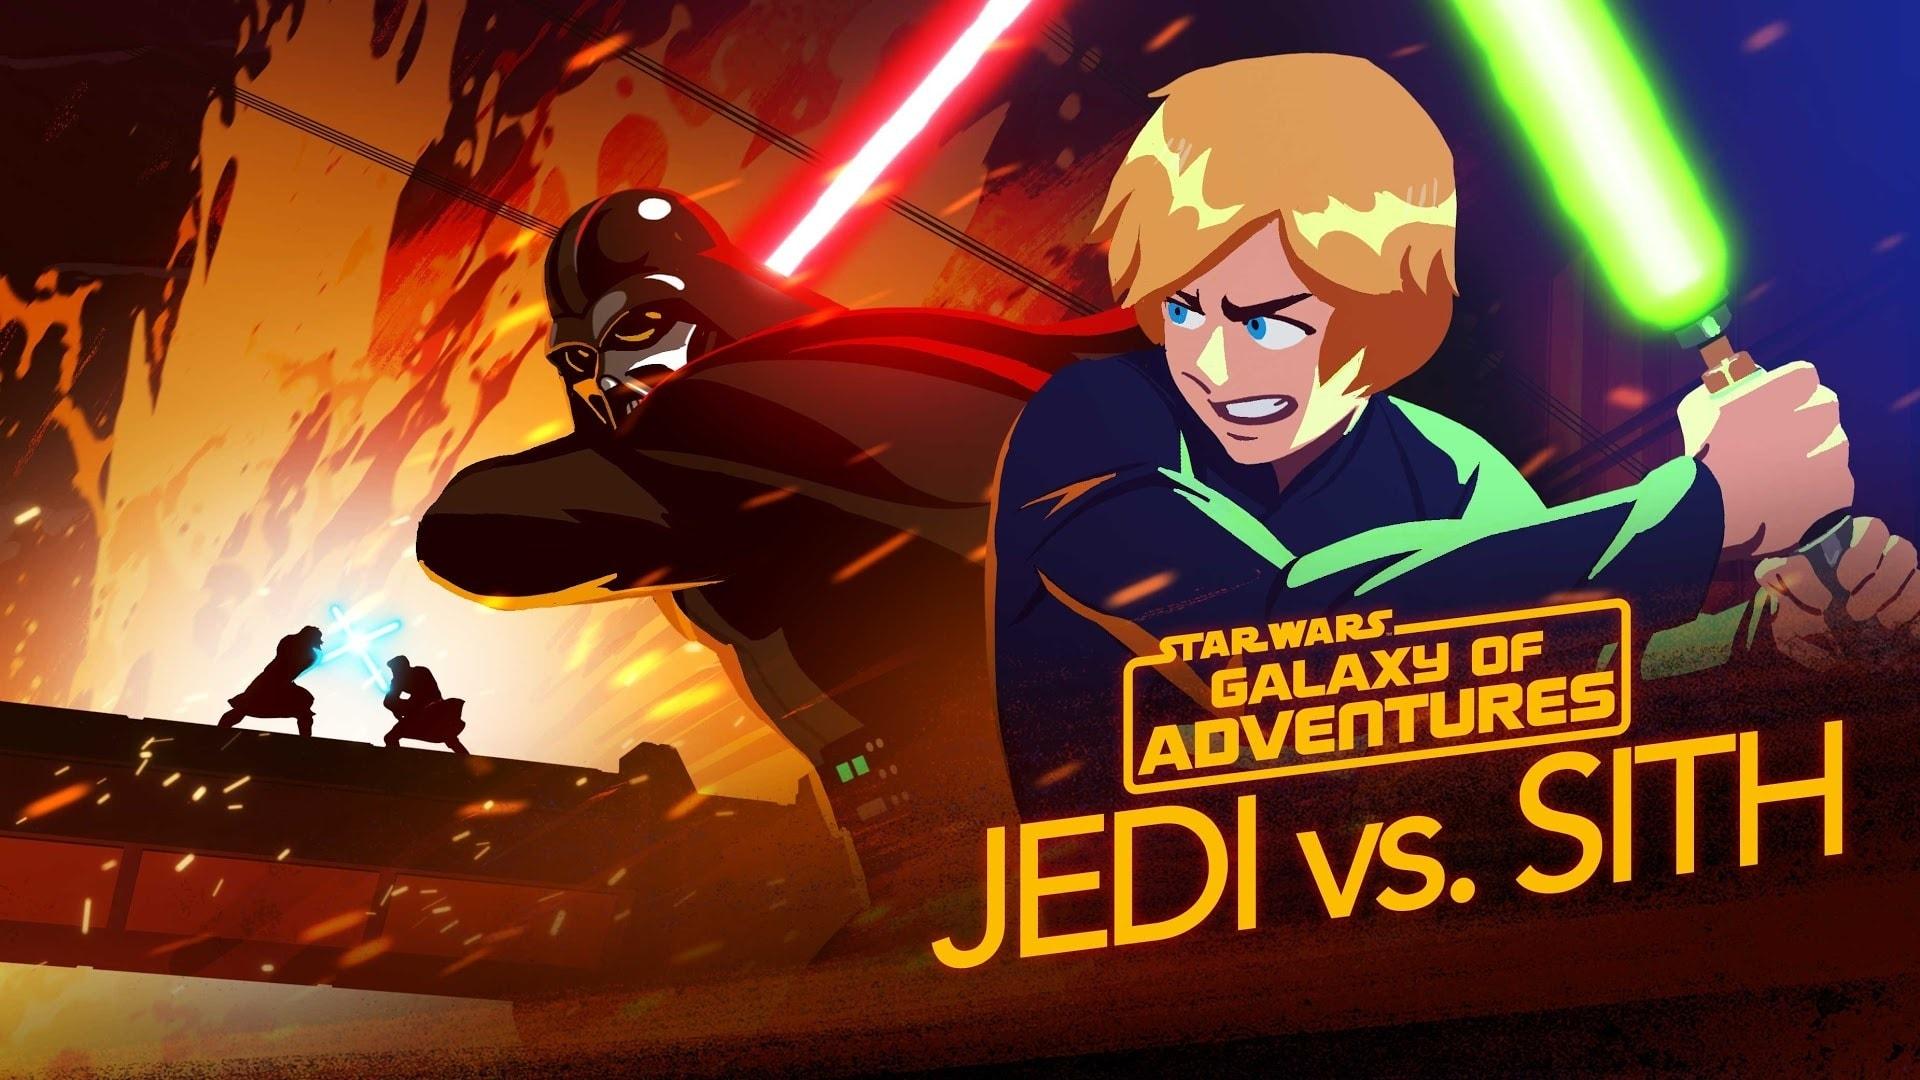 Jedi vs. Sith Skywalker Saga. Star Wars Galaxy of Adventures